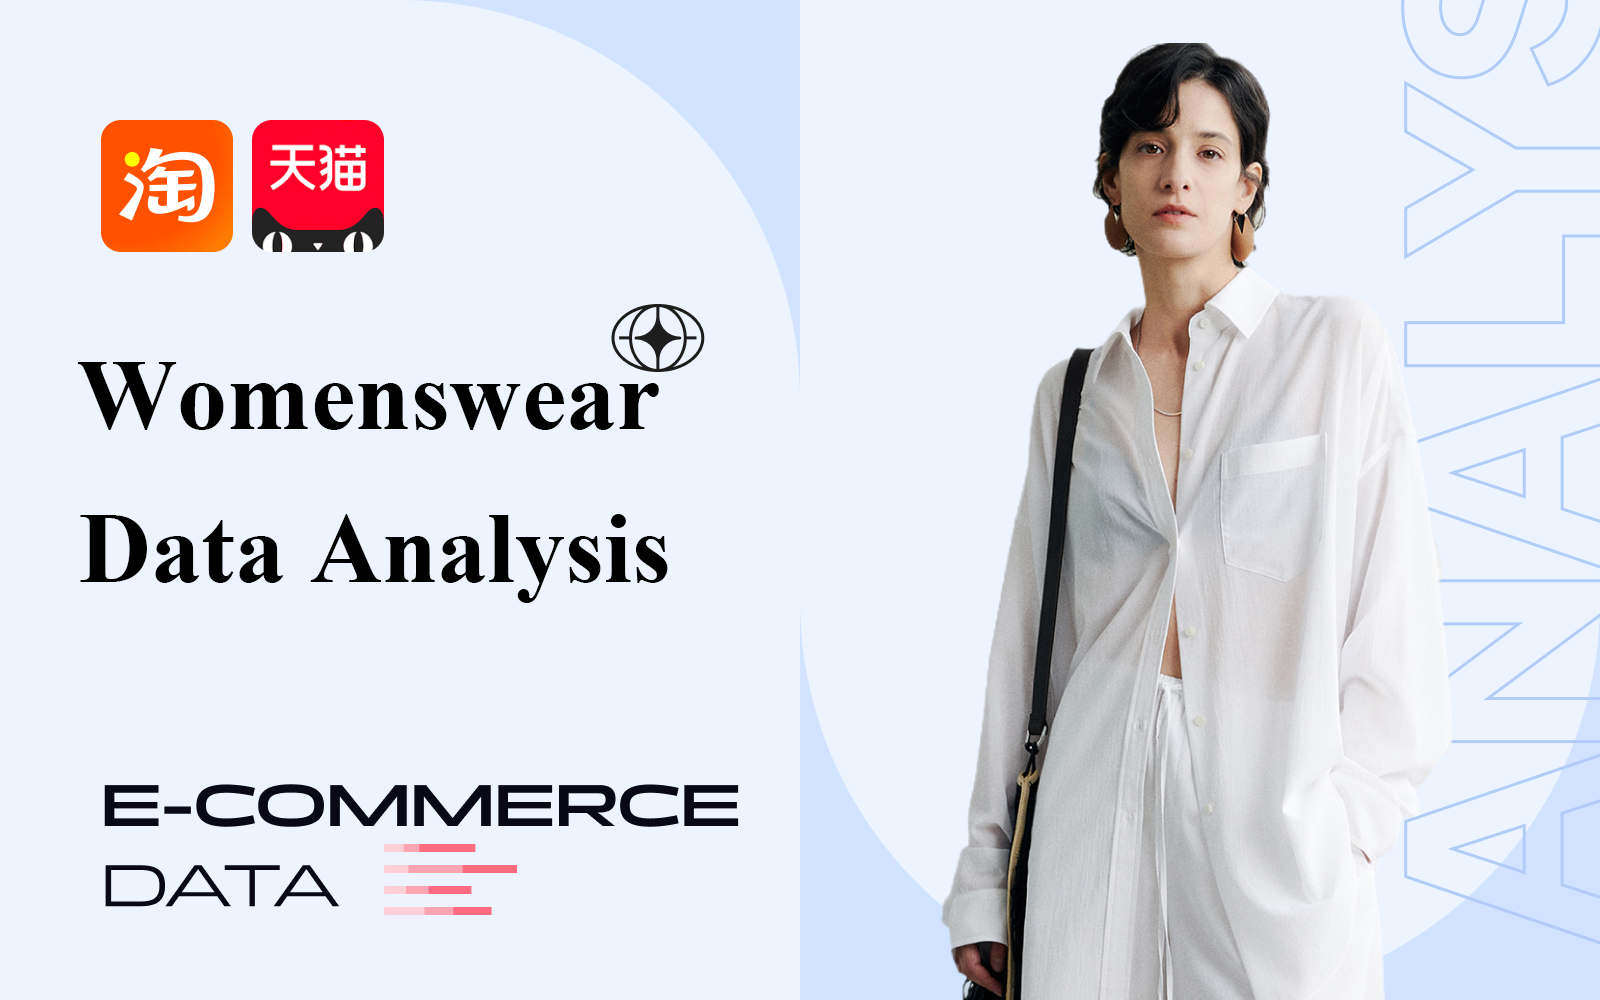 The Data Analysis of Womenswear E-Commerce